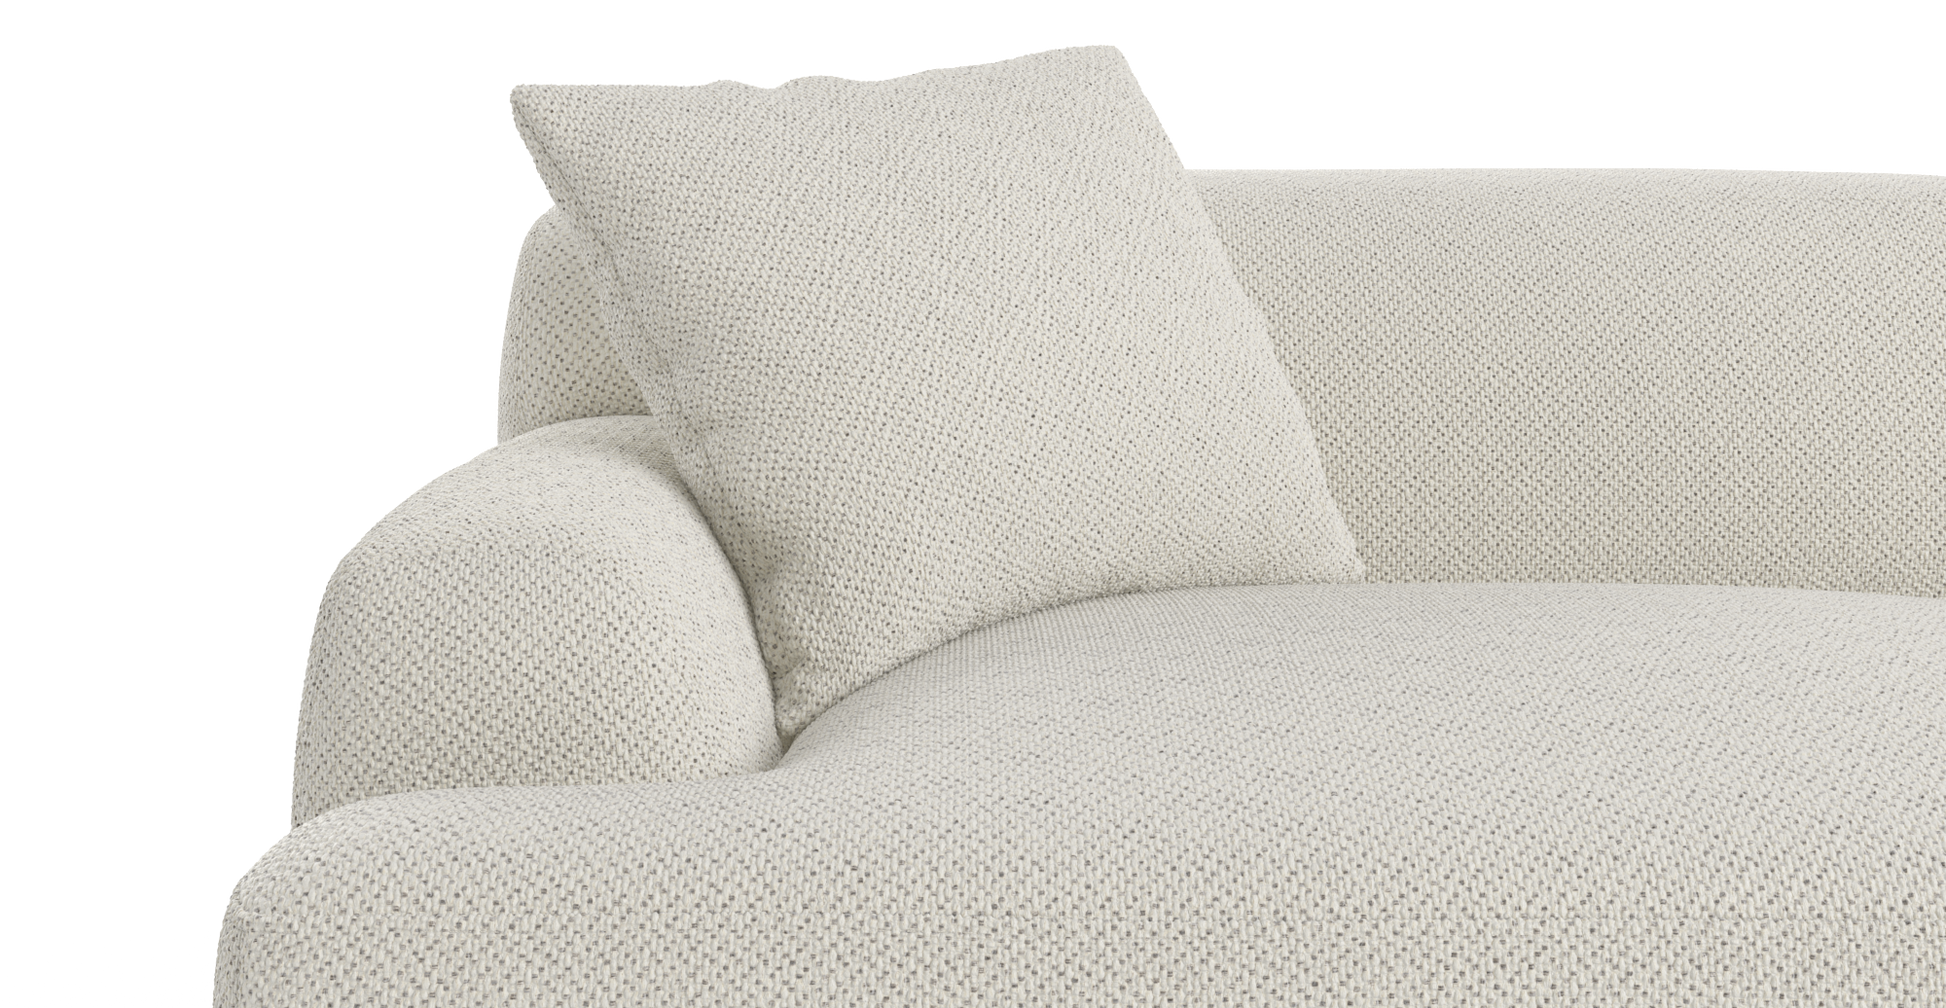 Brosa Seta 4 Seater Sofa (Seashell White)